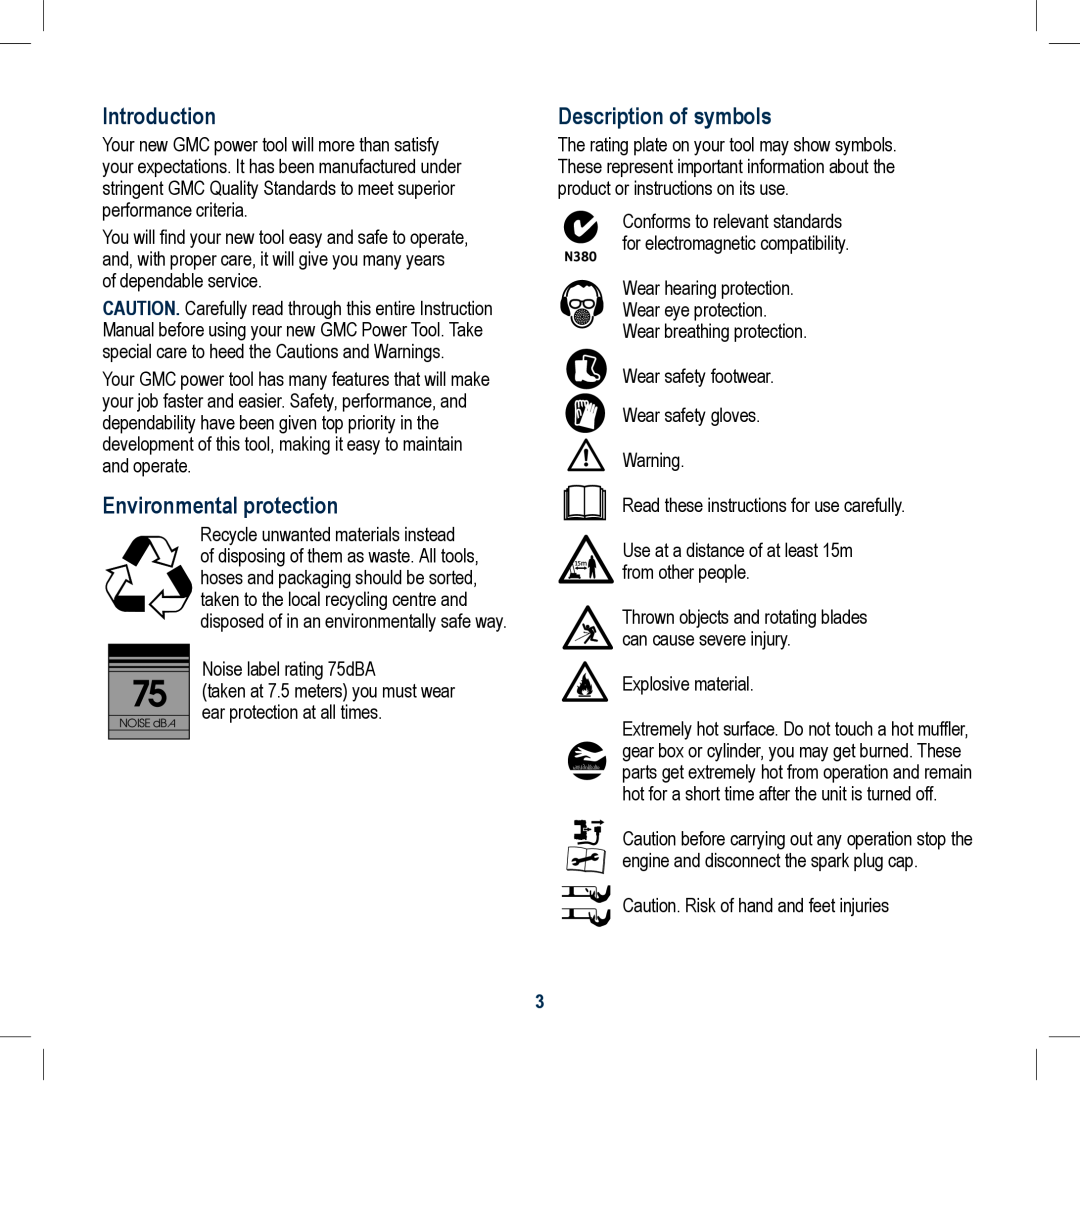 Global Machinery Company RL504 instruction manual Introduction, Environmental protection, Description of symbols 